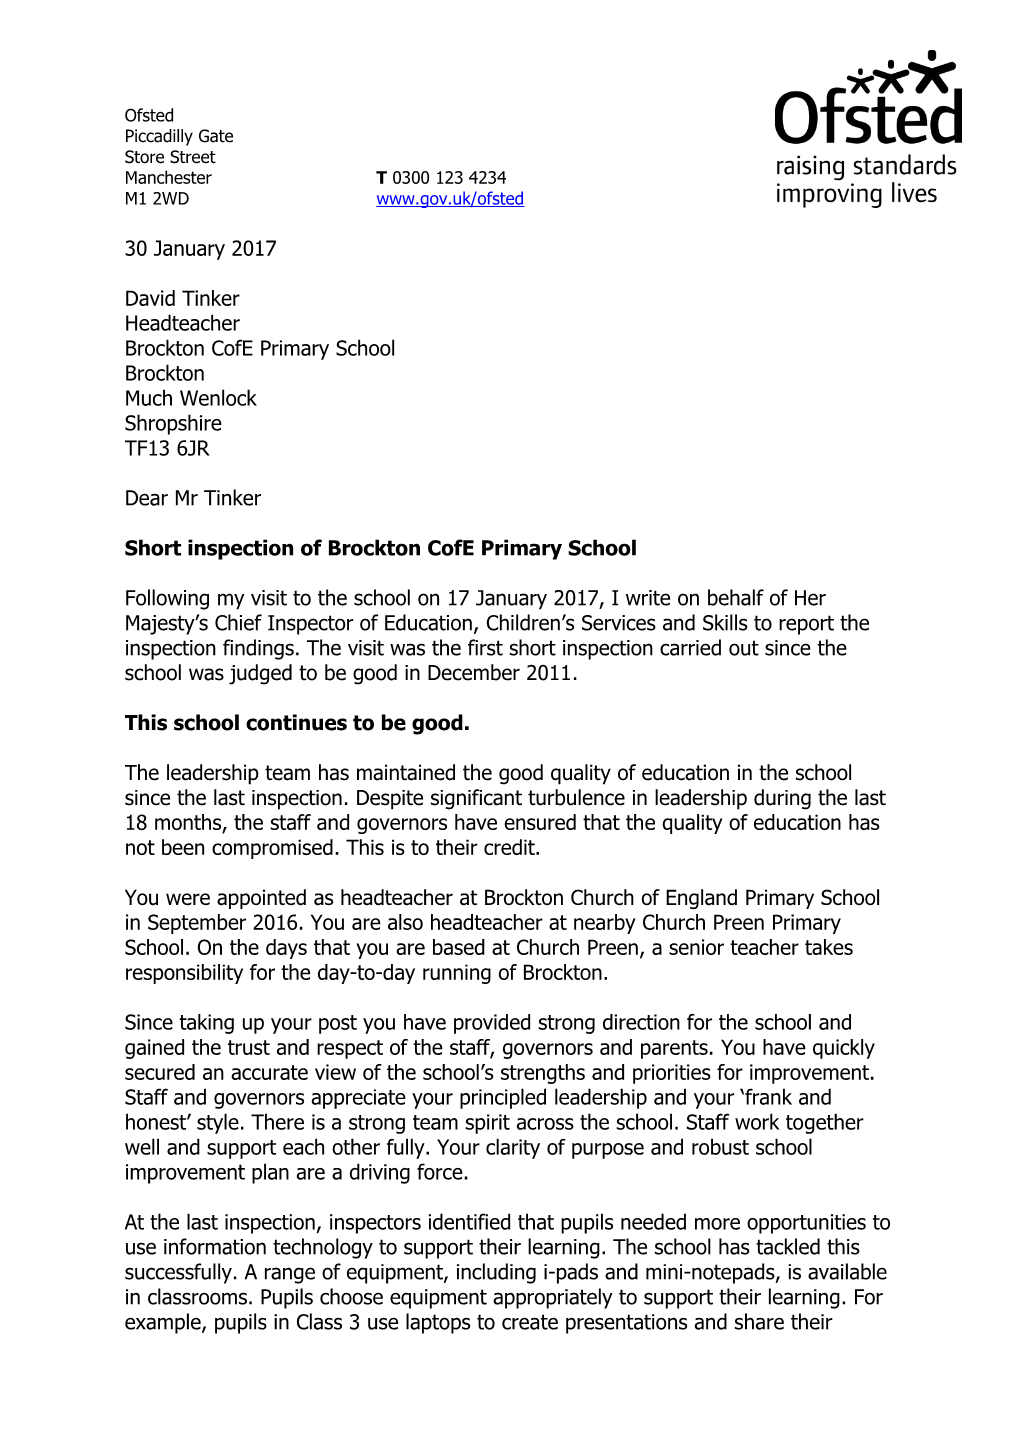 30 January 2017 David Tinker Headteacher Brockton Cofe Primary School Brockton Much Wenlock Shropshire TF13 6JR Dear Mr Tinker